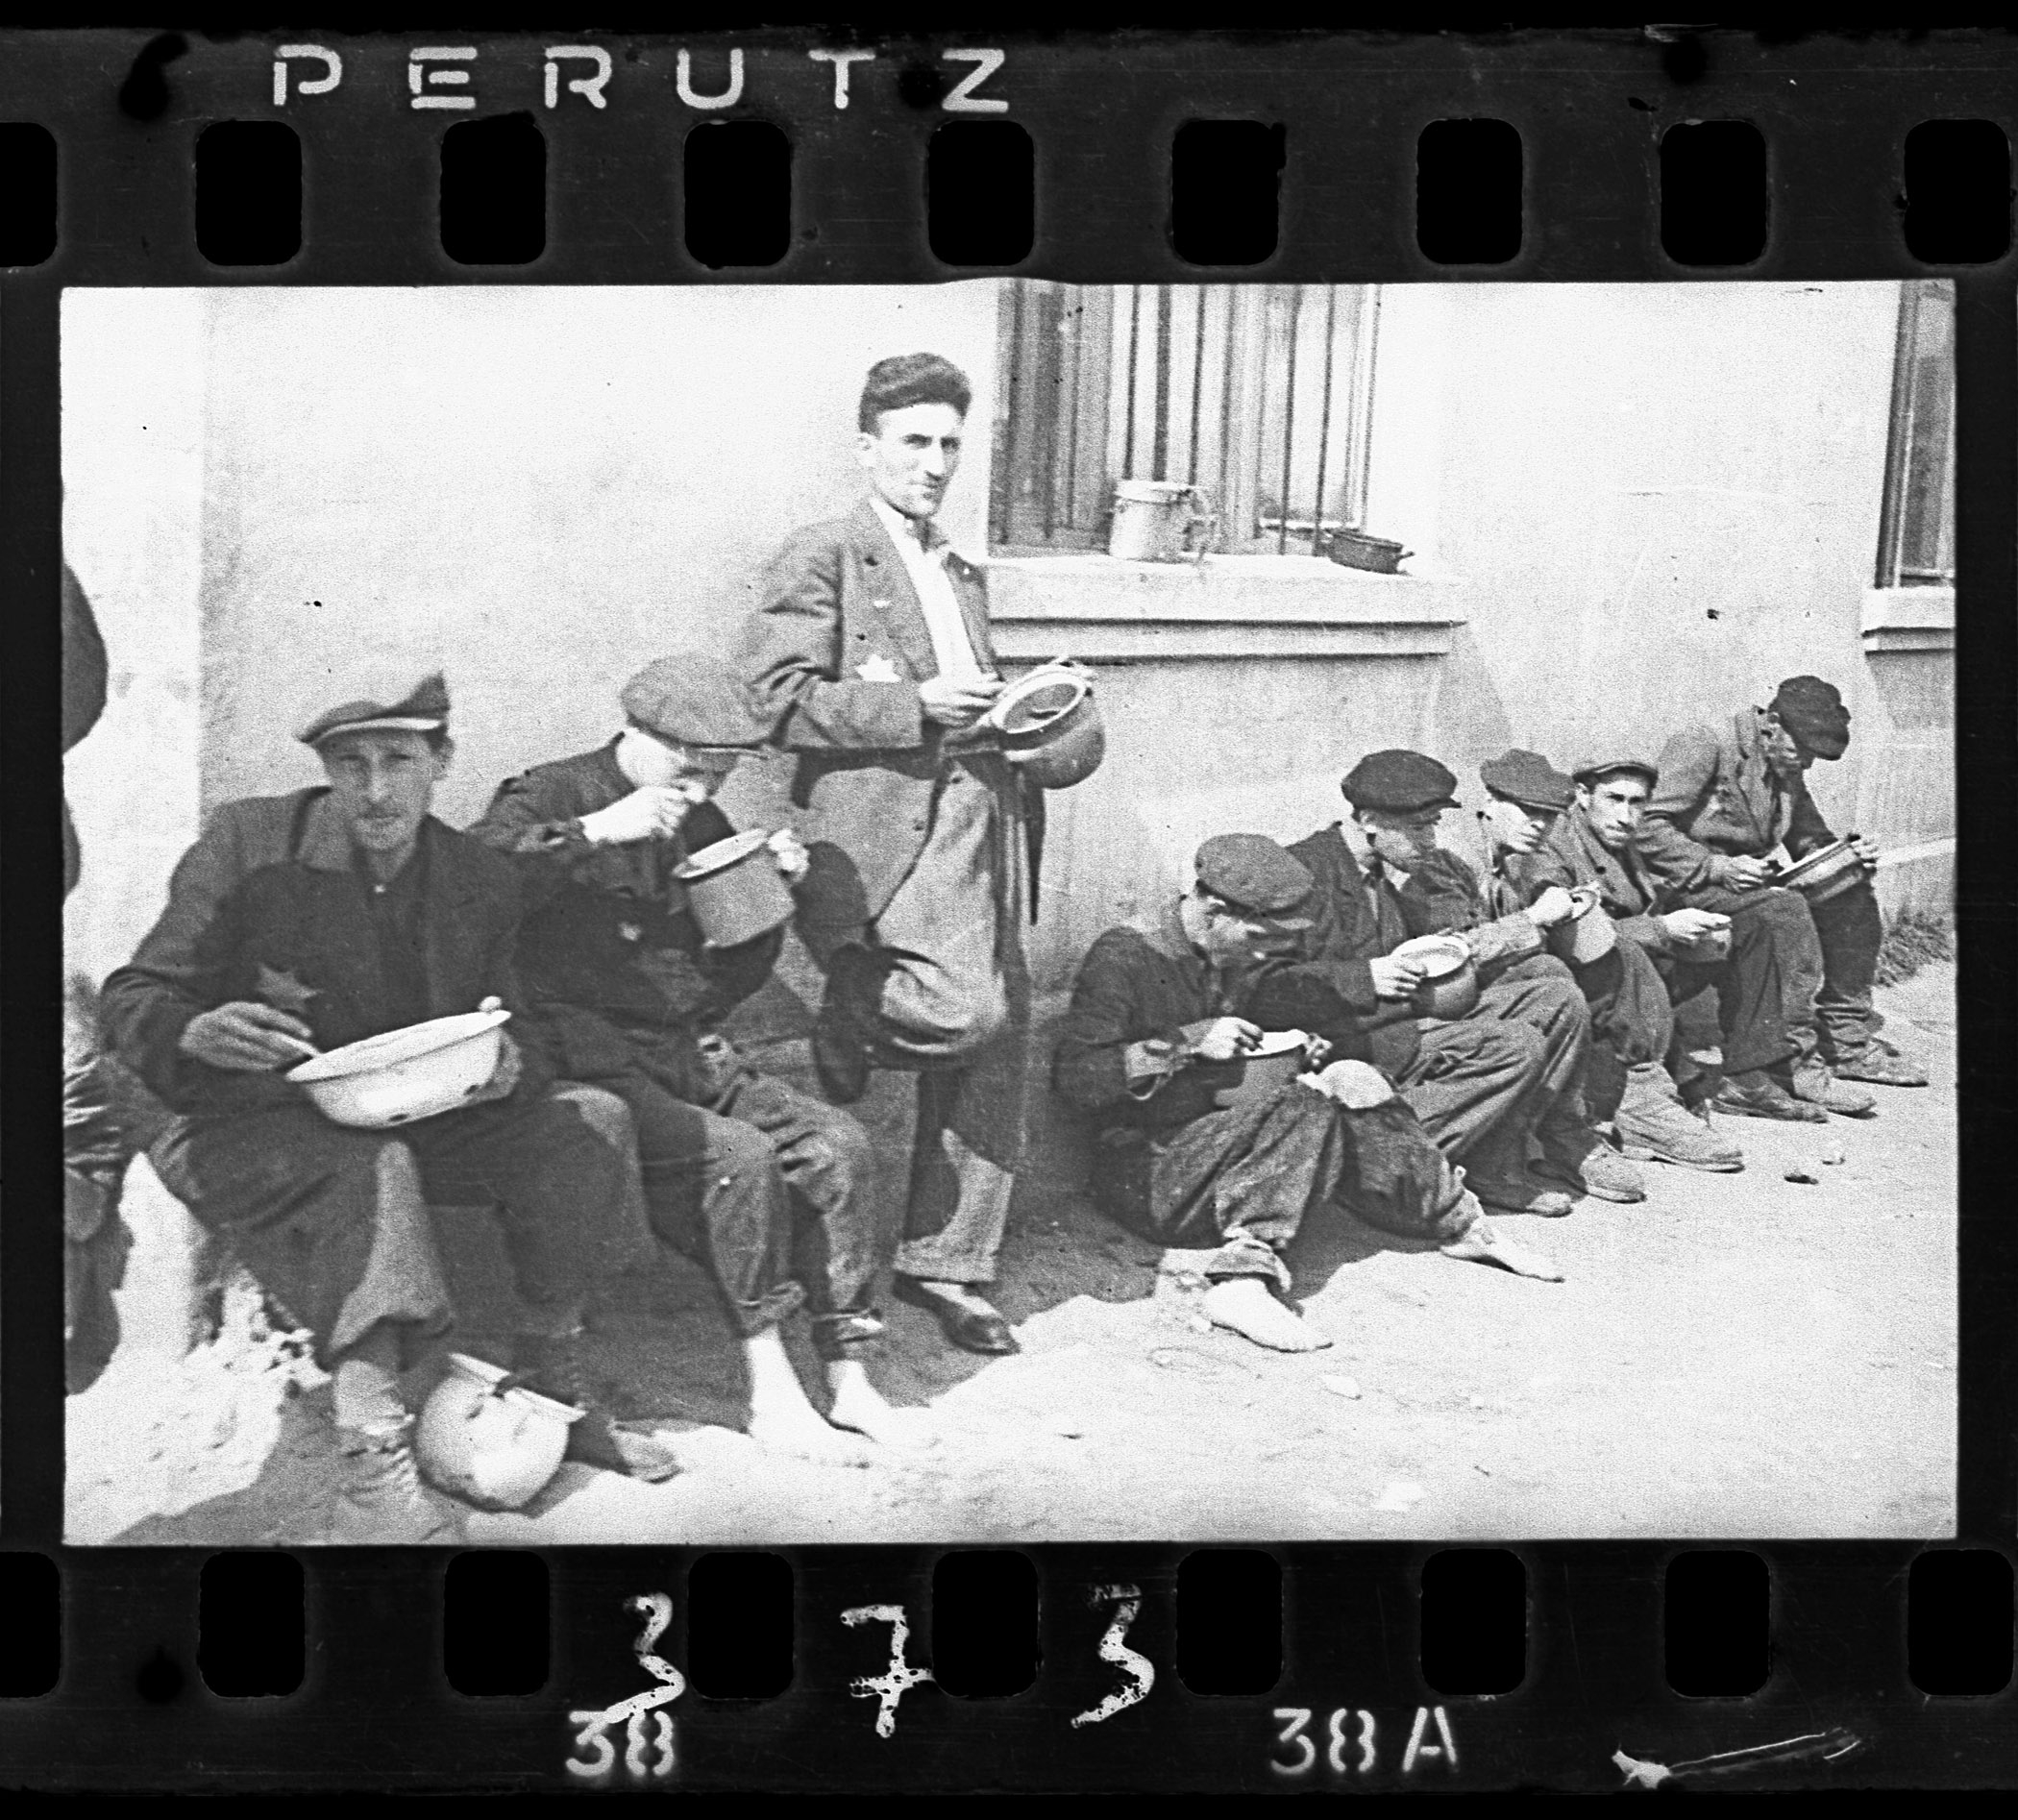     Henryk Ross, Lodz ghetto: â€œSoup for lunchâ€ (Group of men alongside building eating from pails), 1940-44 Art Gallery of Ontario Gift from Archive of Modern Conflict, 2007 Â© Art Gallery of Ontario

